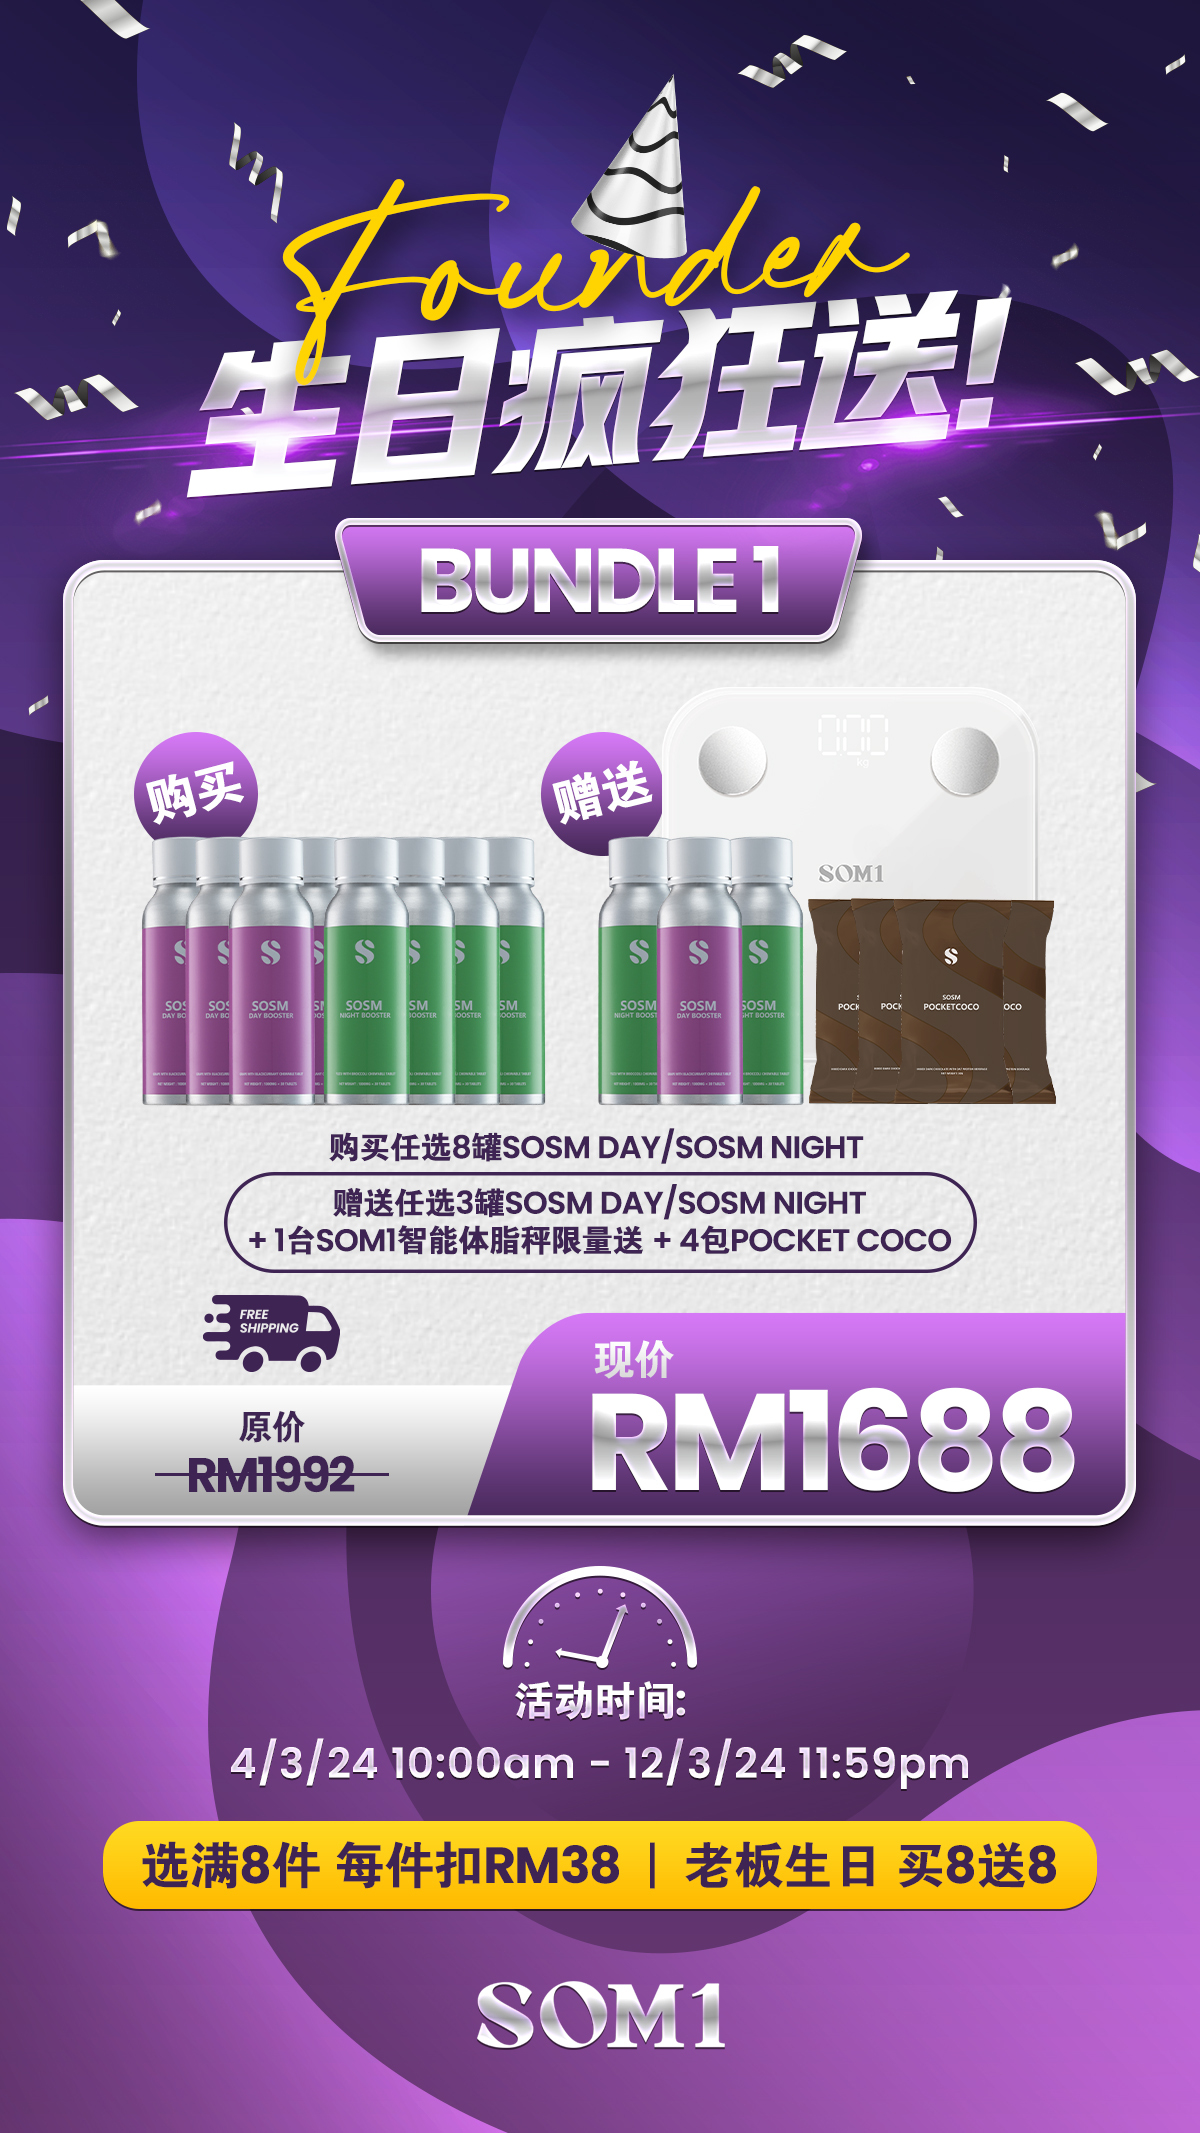 Bundle 1 Malaysia 中文-1709510907995